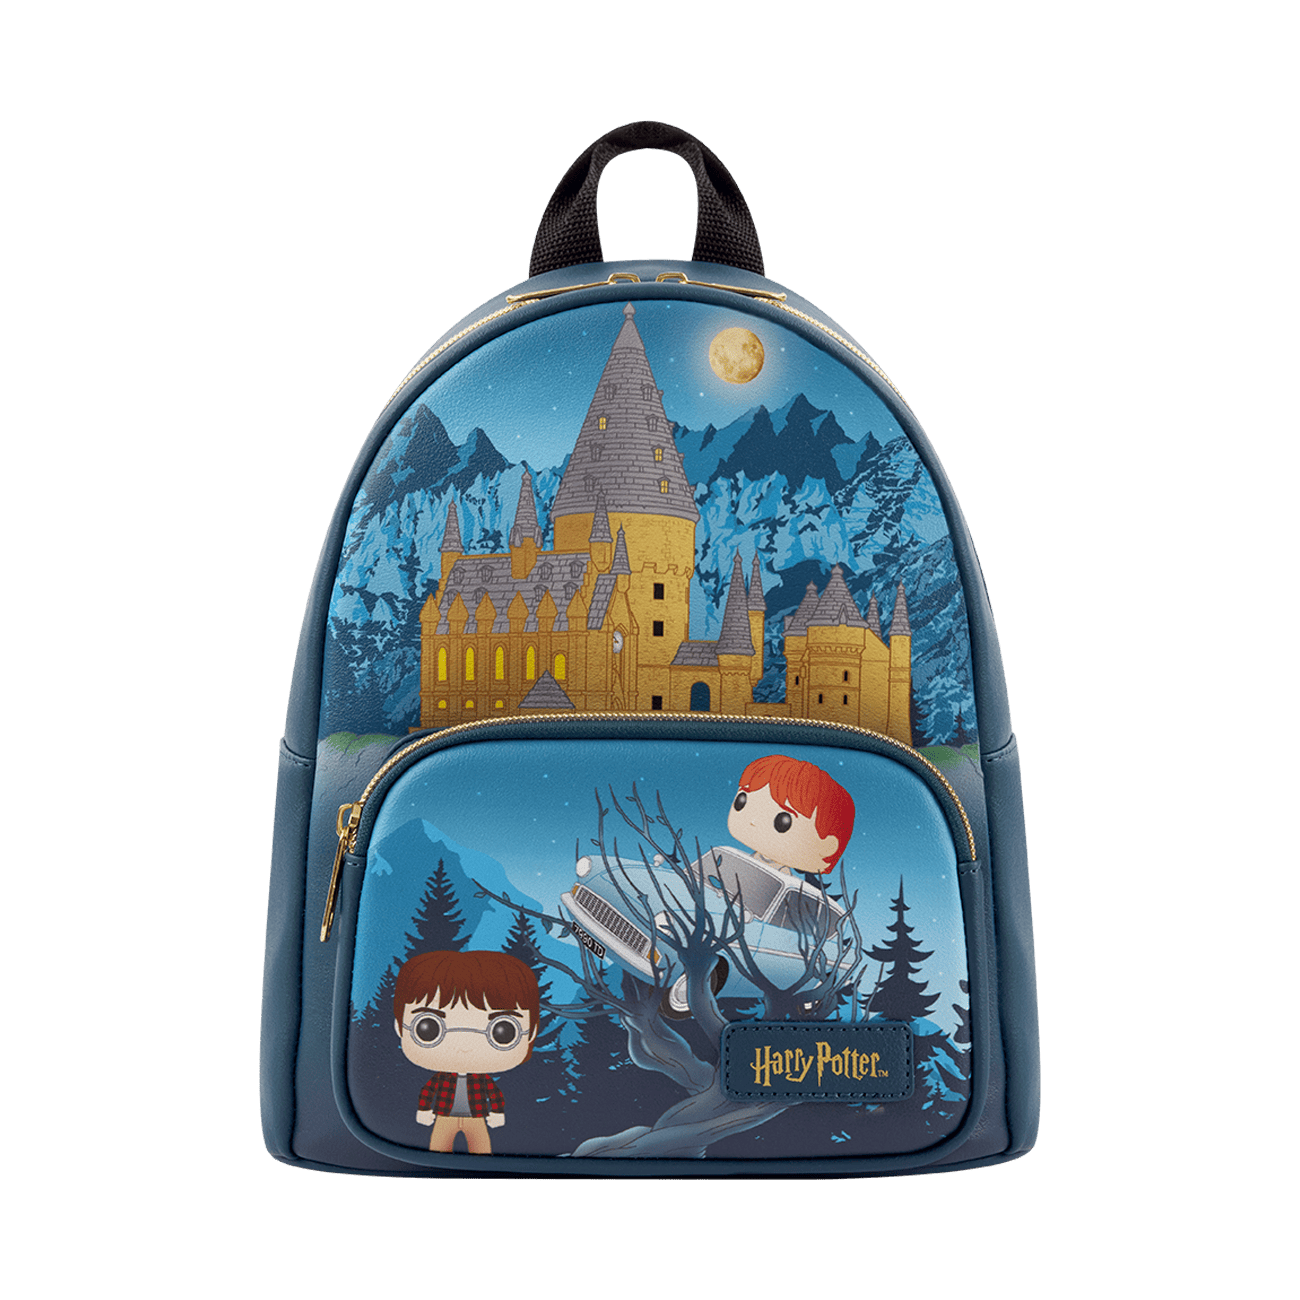 Brújula salvar Finanzas Buy Harry Potter Mini Backpack at Funko.